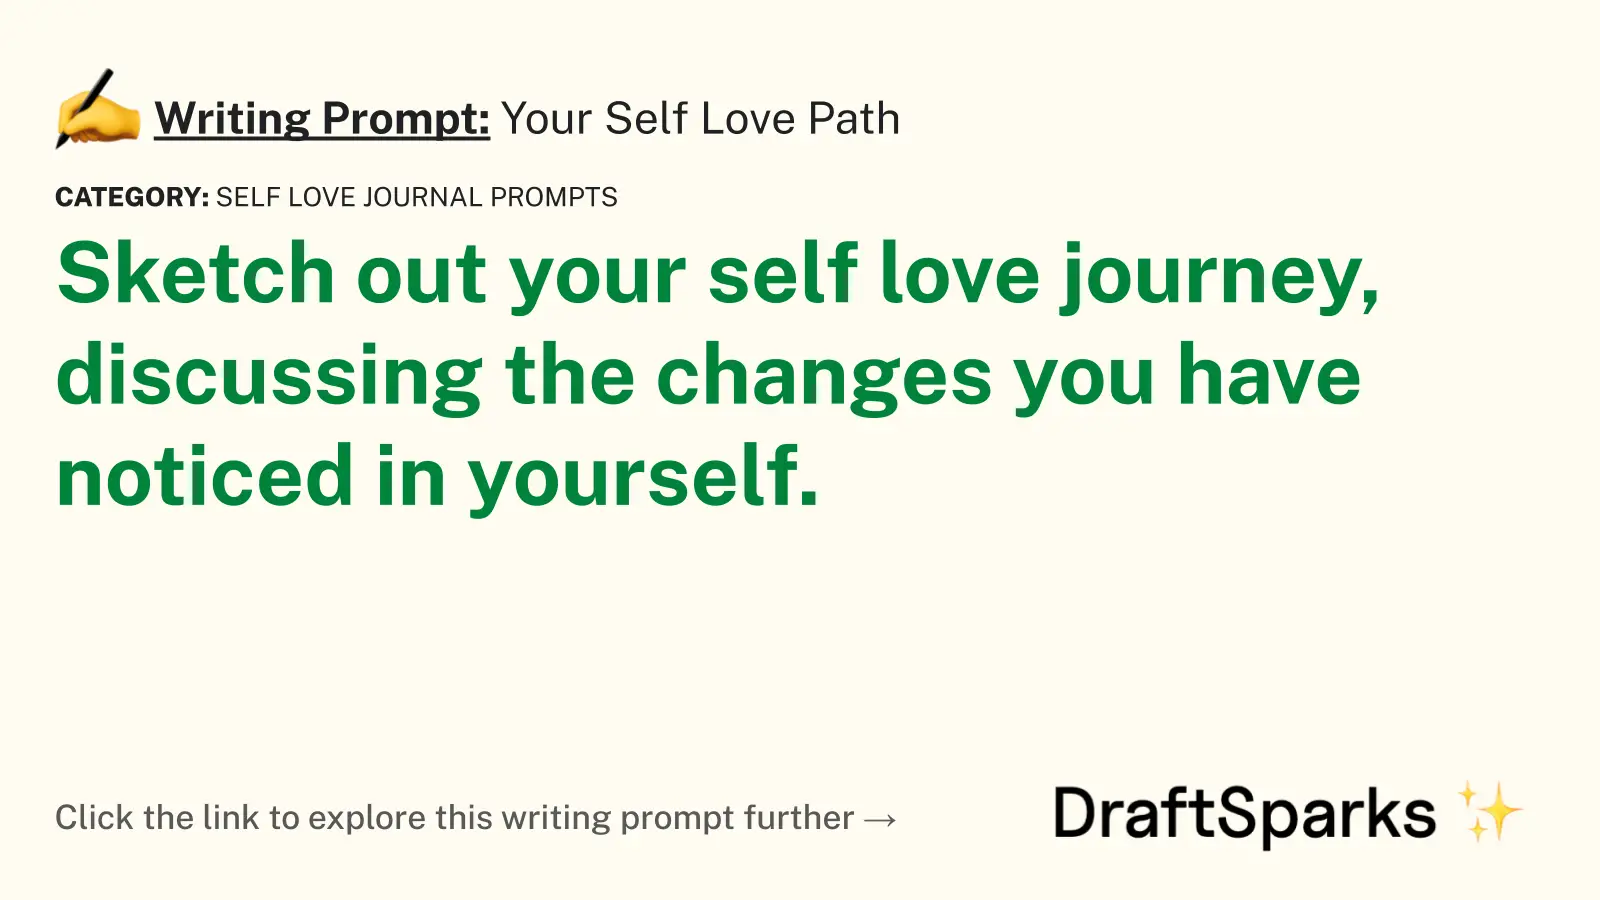 Your Self Love Path